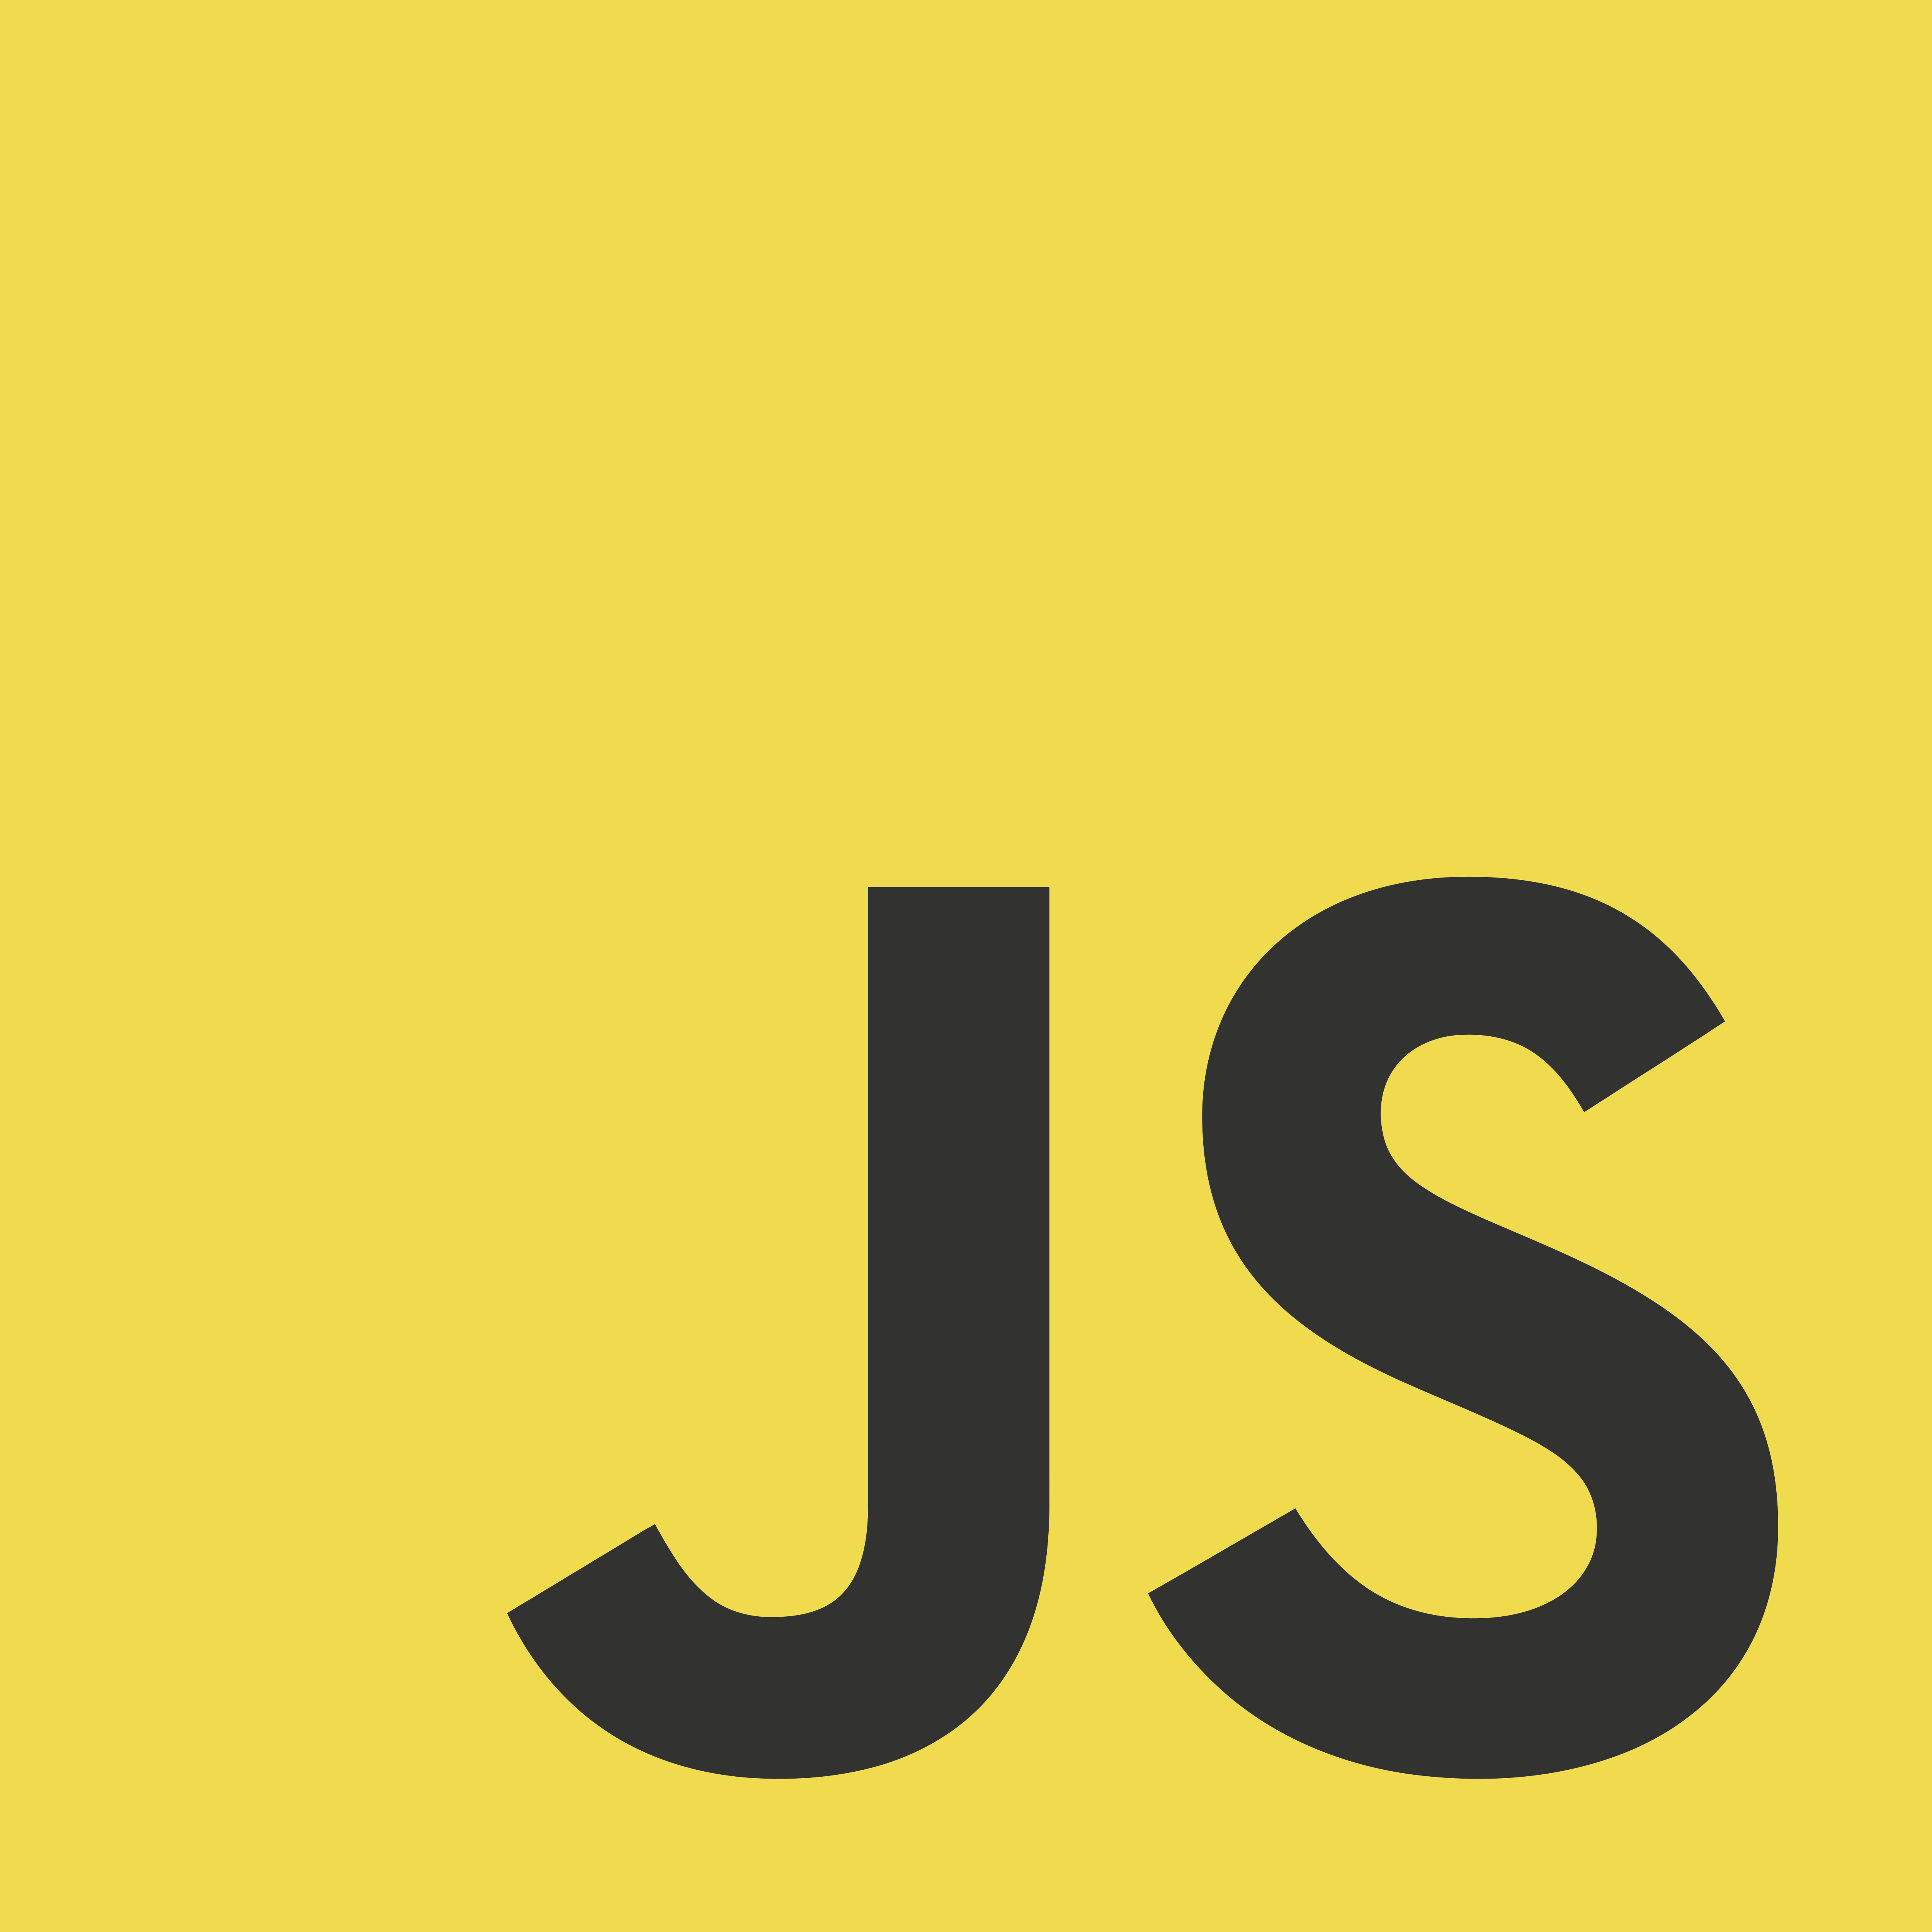 JavaScript Badge - Not Yet Earned